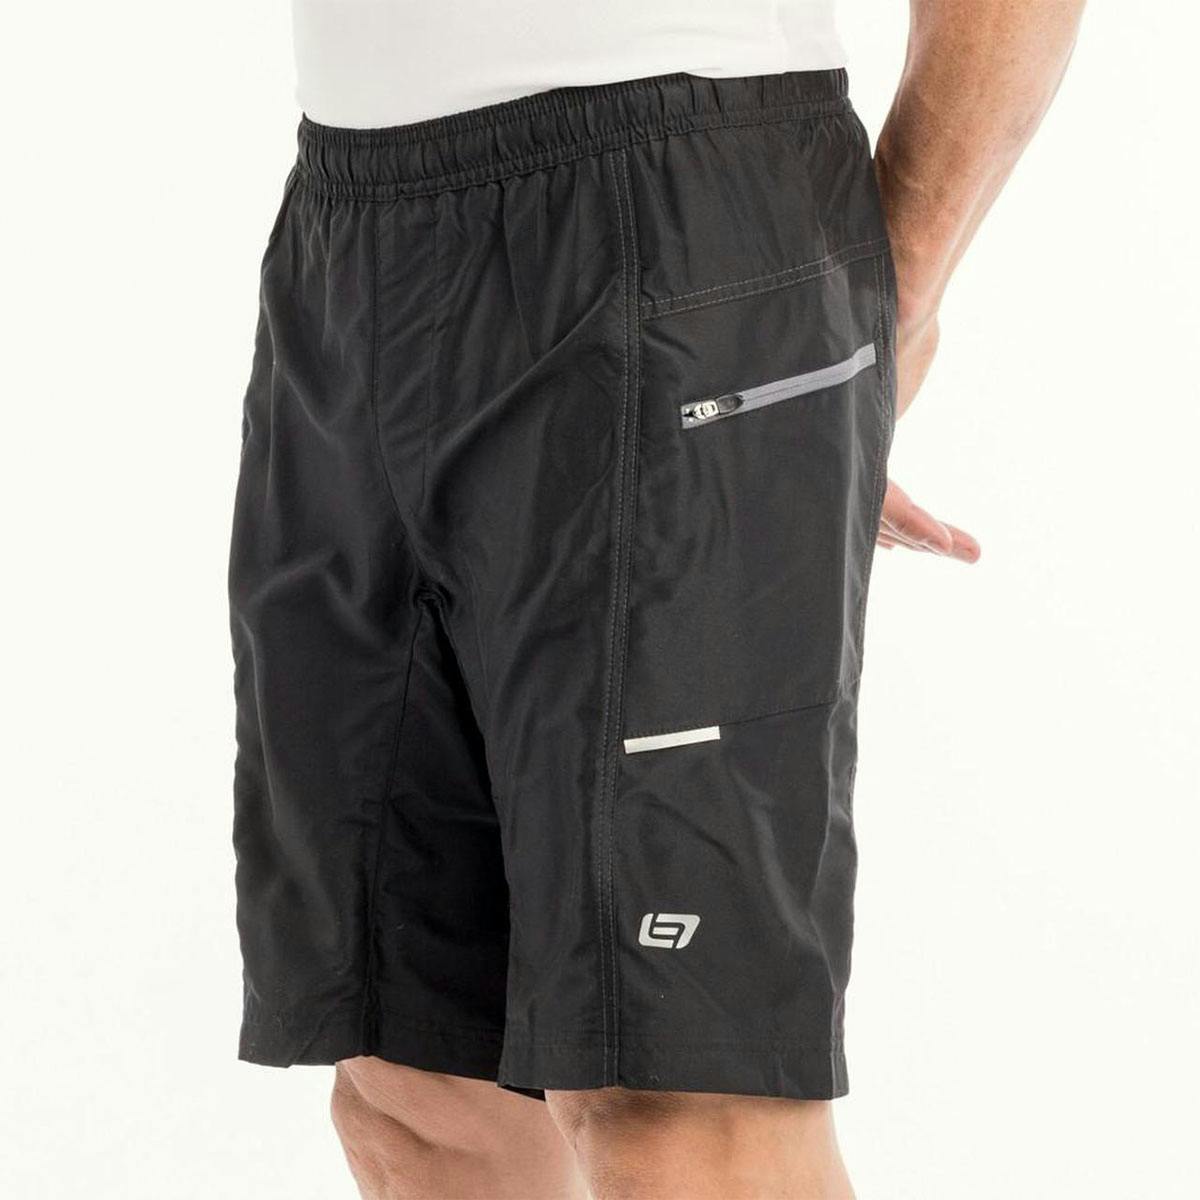 Bellwether Men's Ultralight Gel Baggies Cycling Shorts - Black - Small